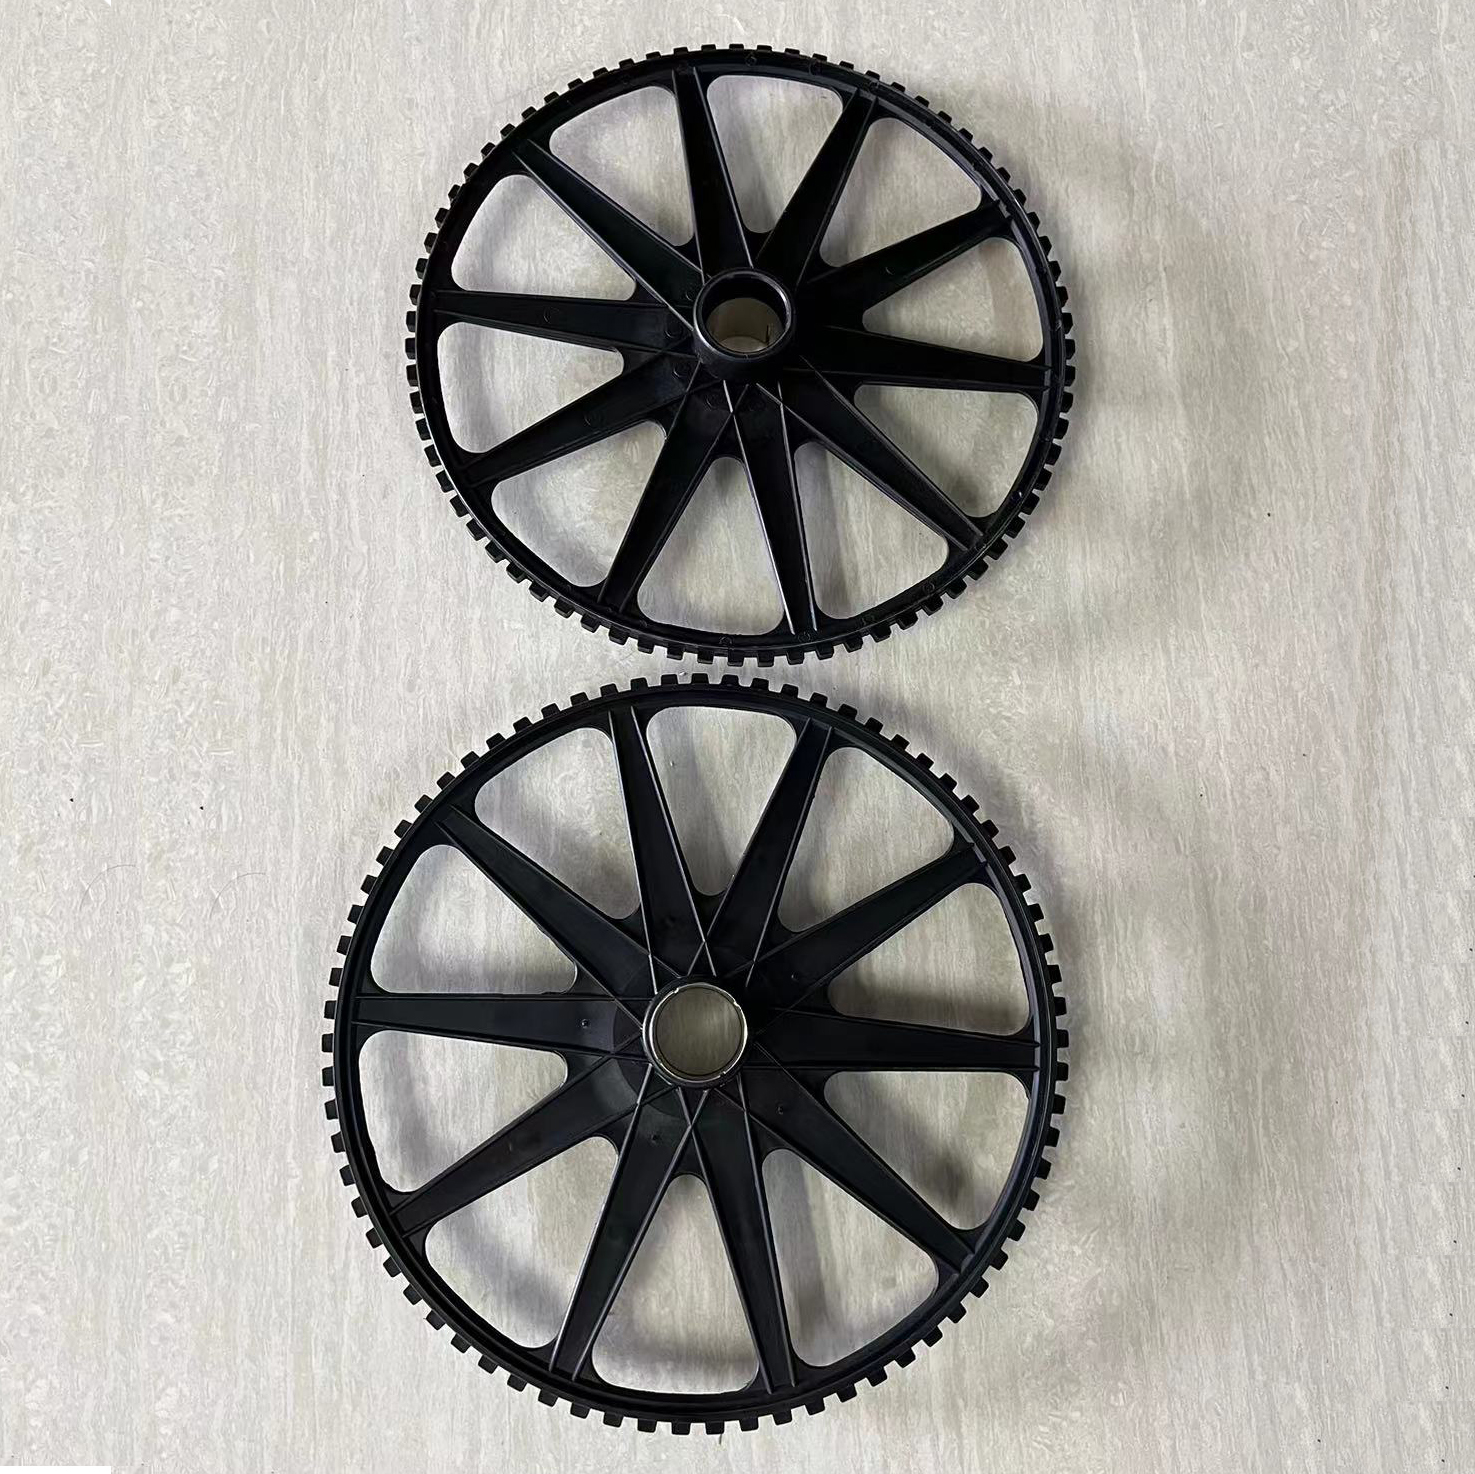 SM93 rapier wheel ADBF03A used for Somet Master 93 loom